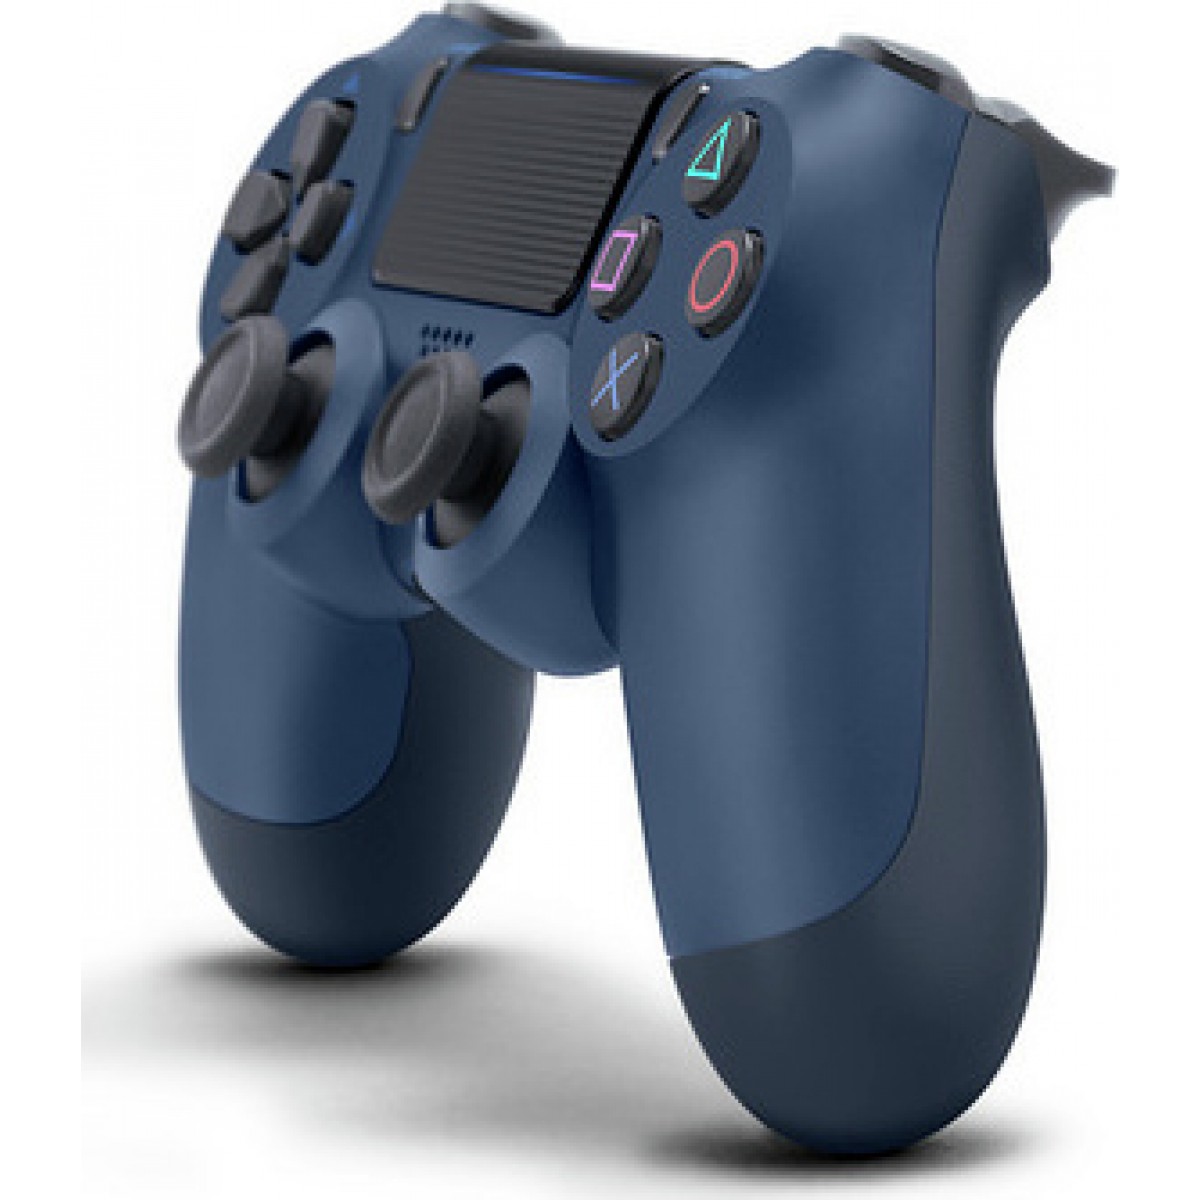 Sony DualShock 4 Controller Midnight Blue V2